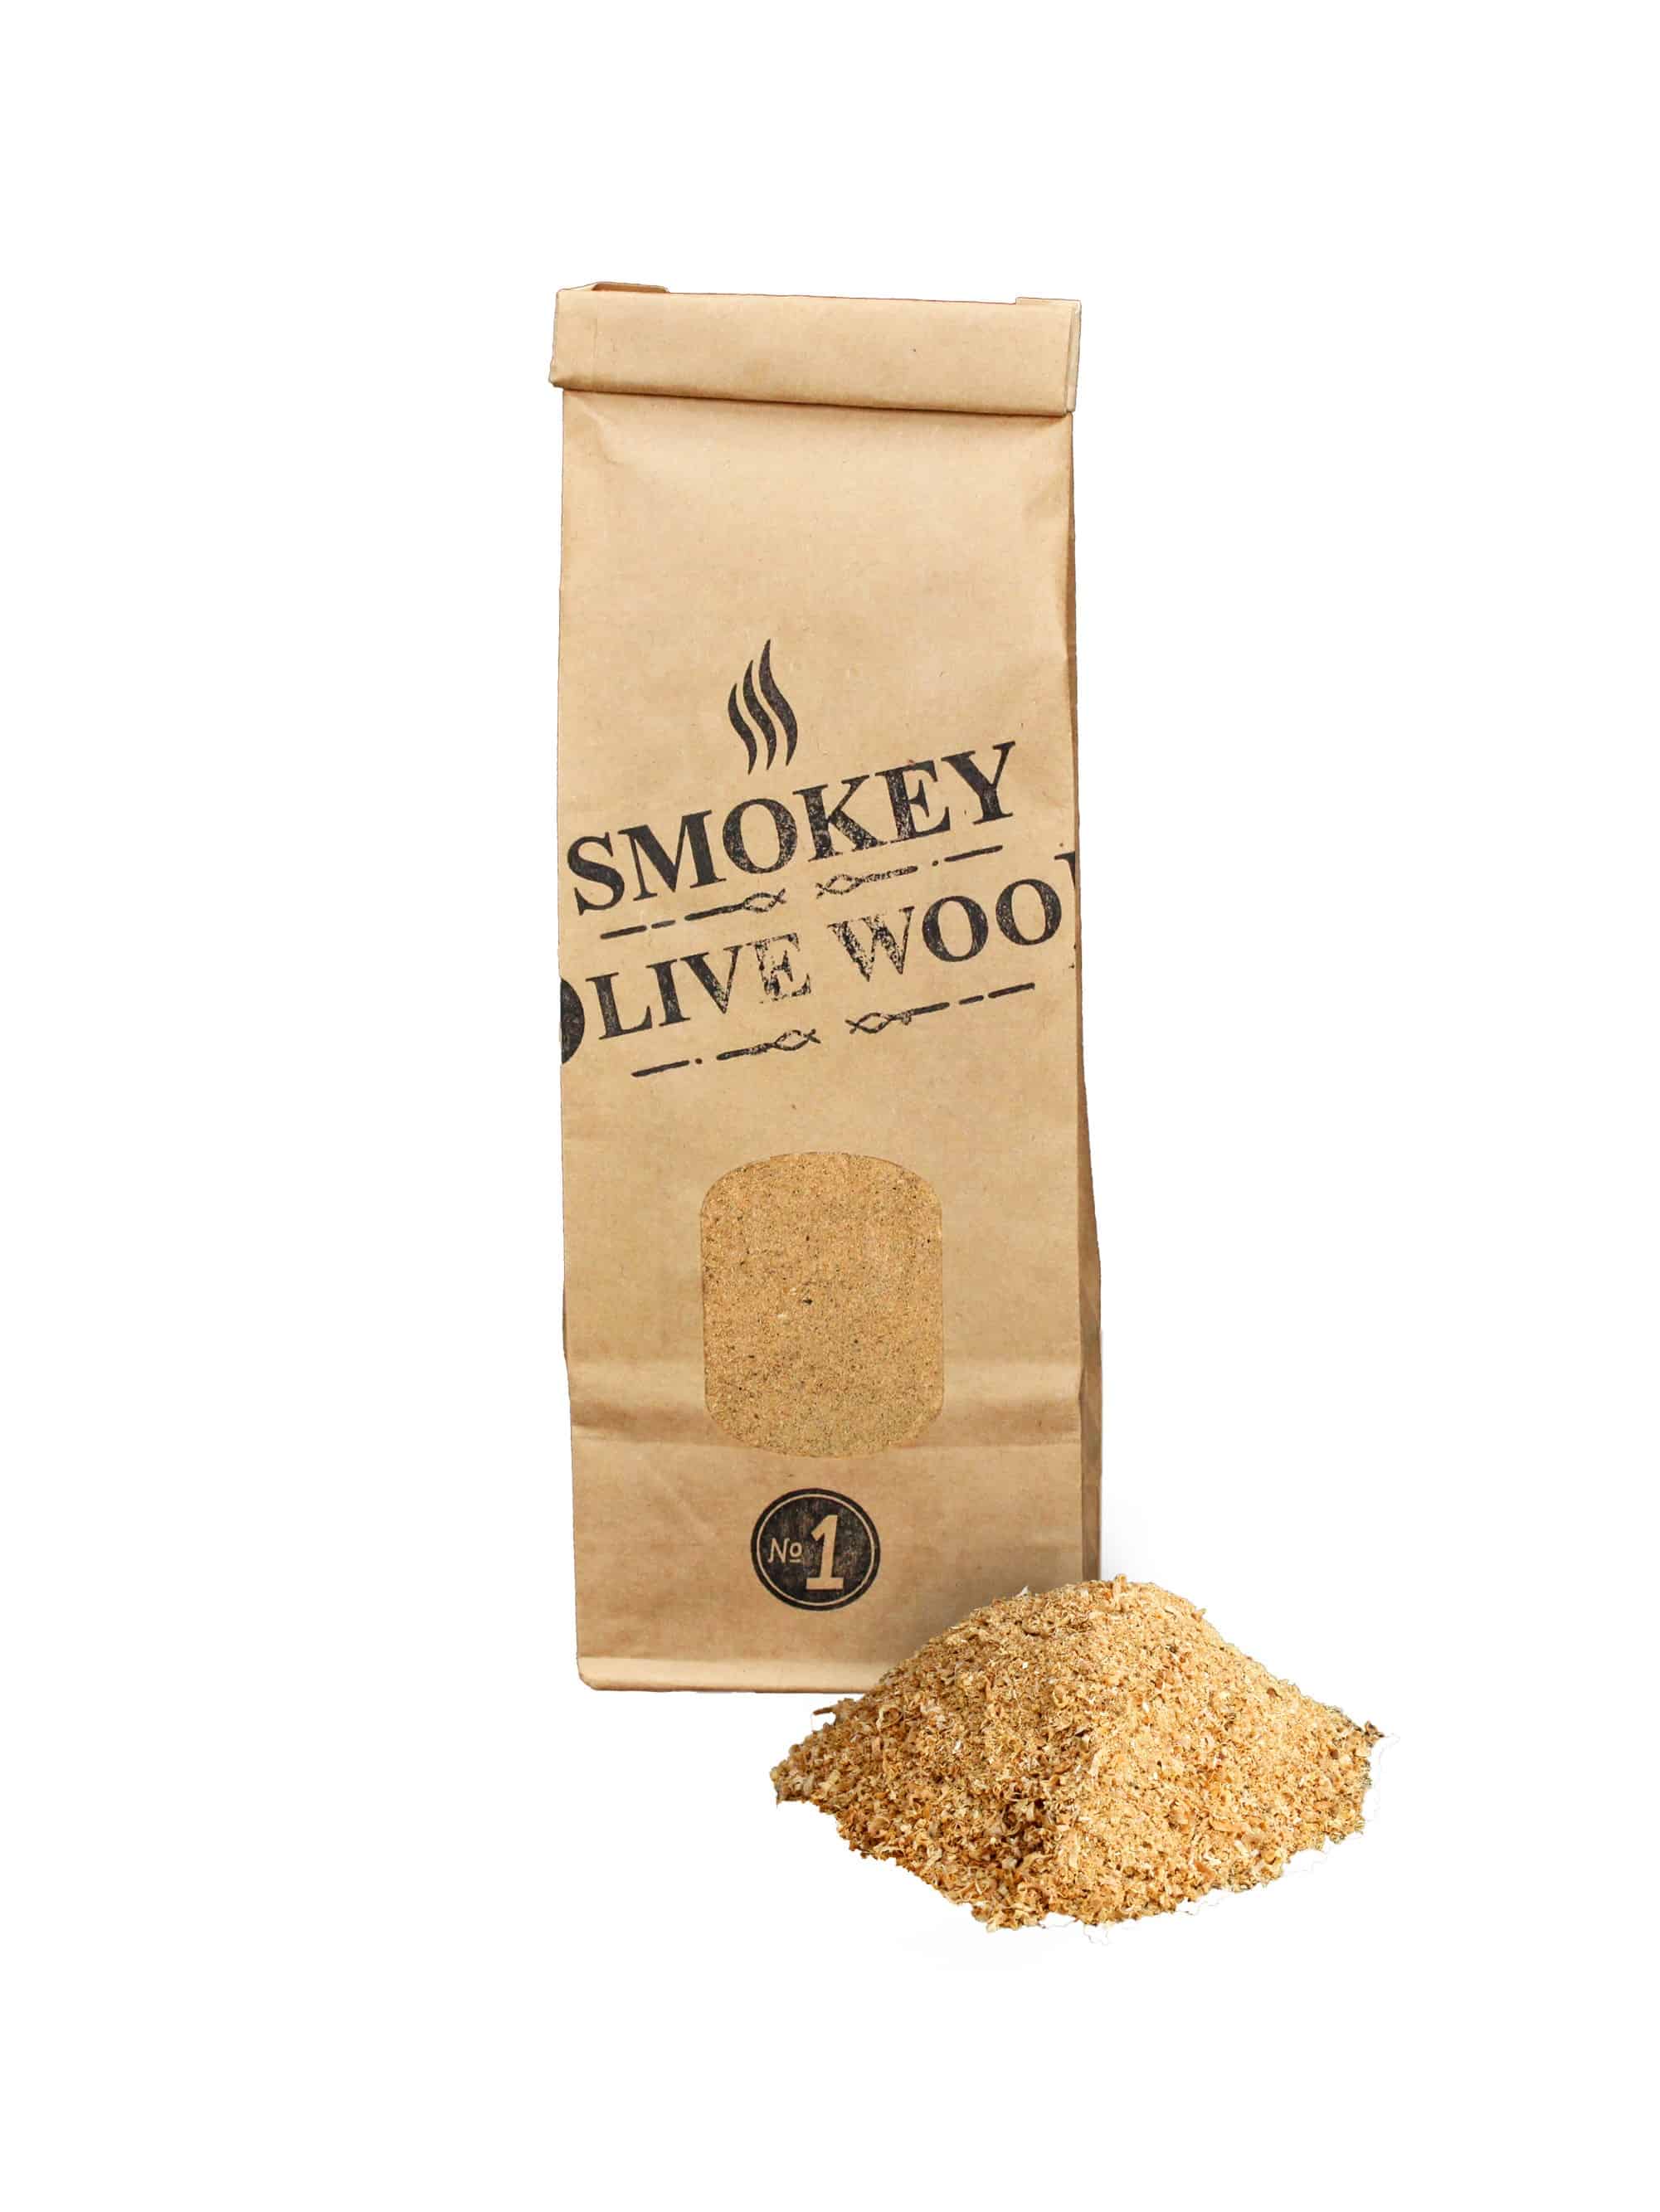 Smokey Olive Wood Trial Pack Nº1 Smoking Dust